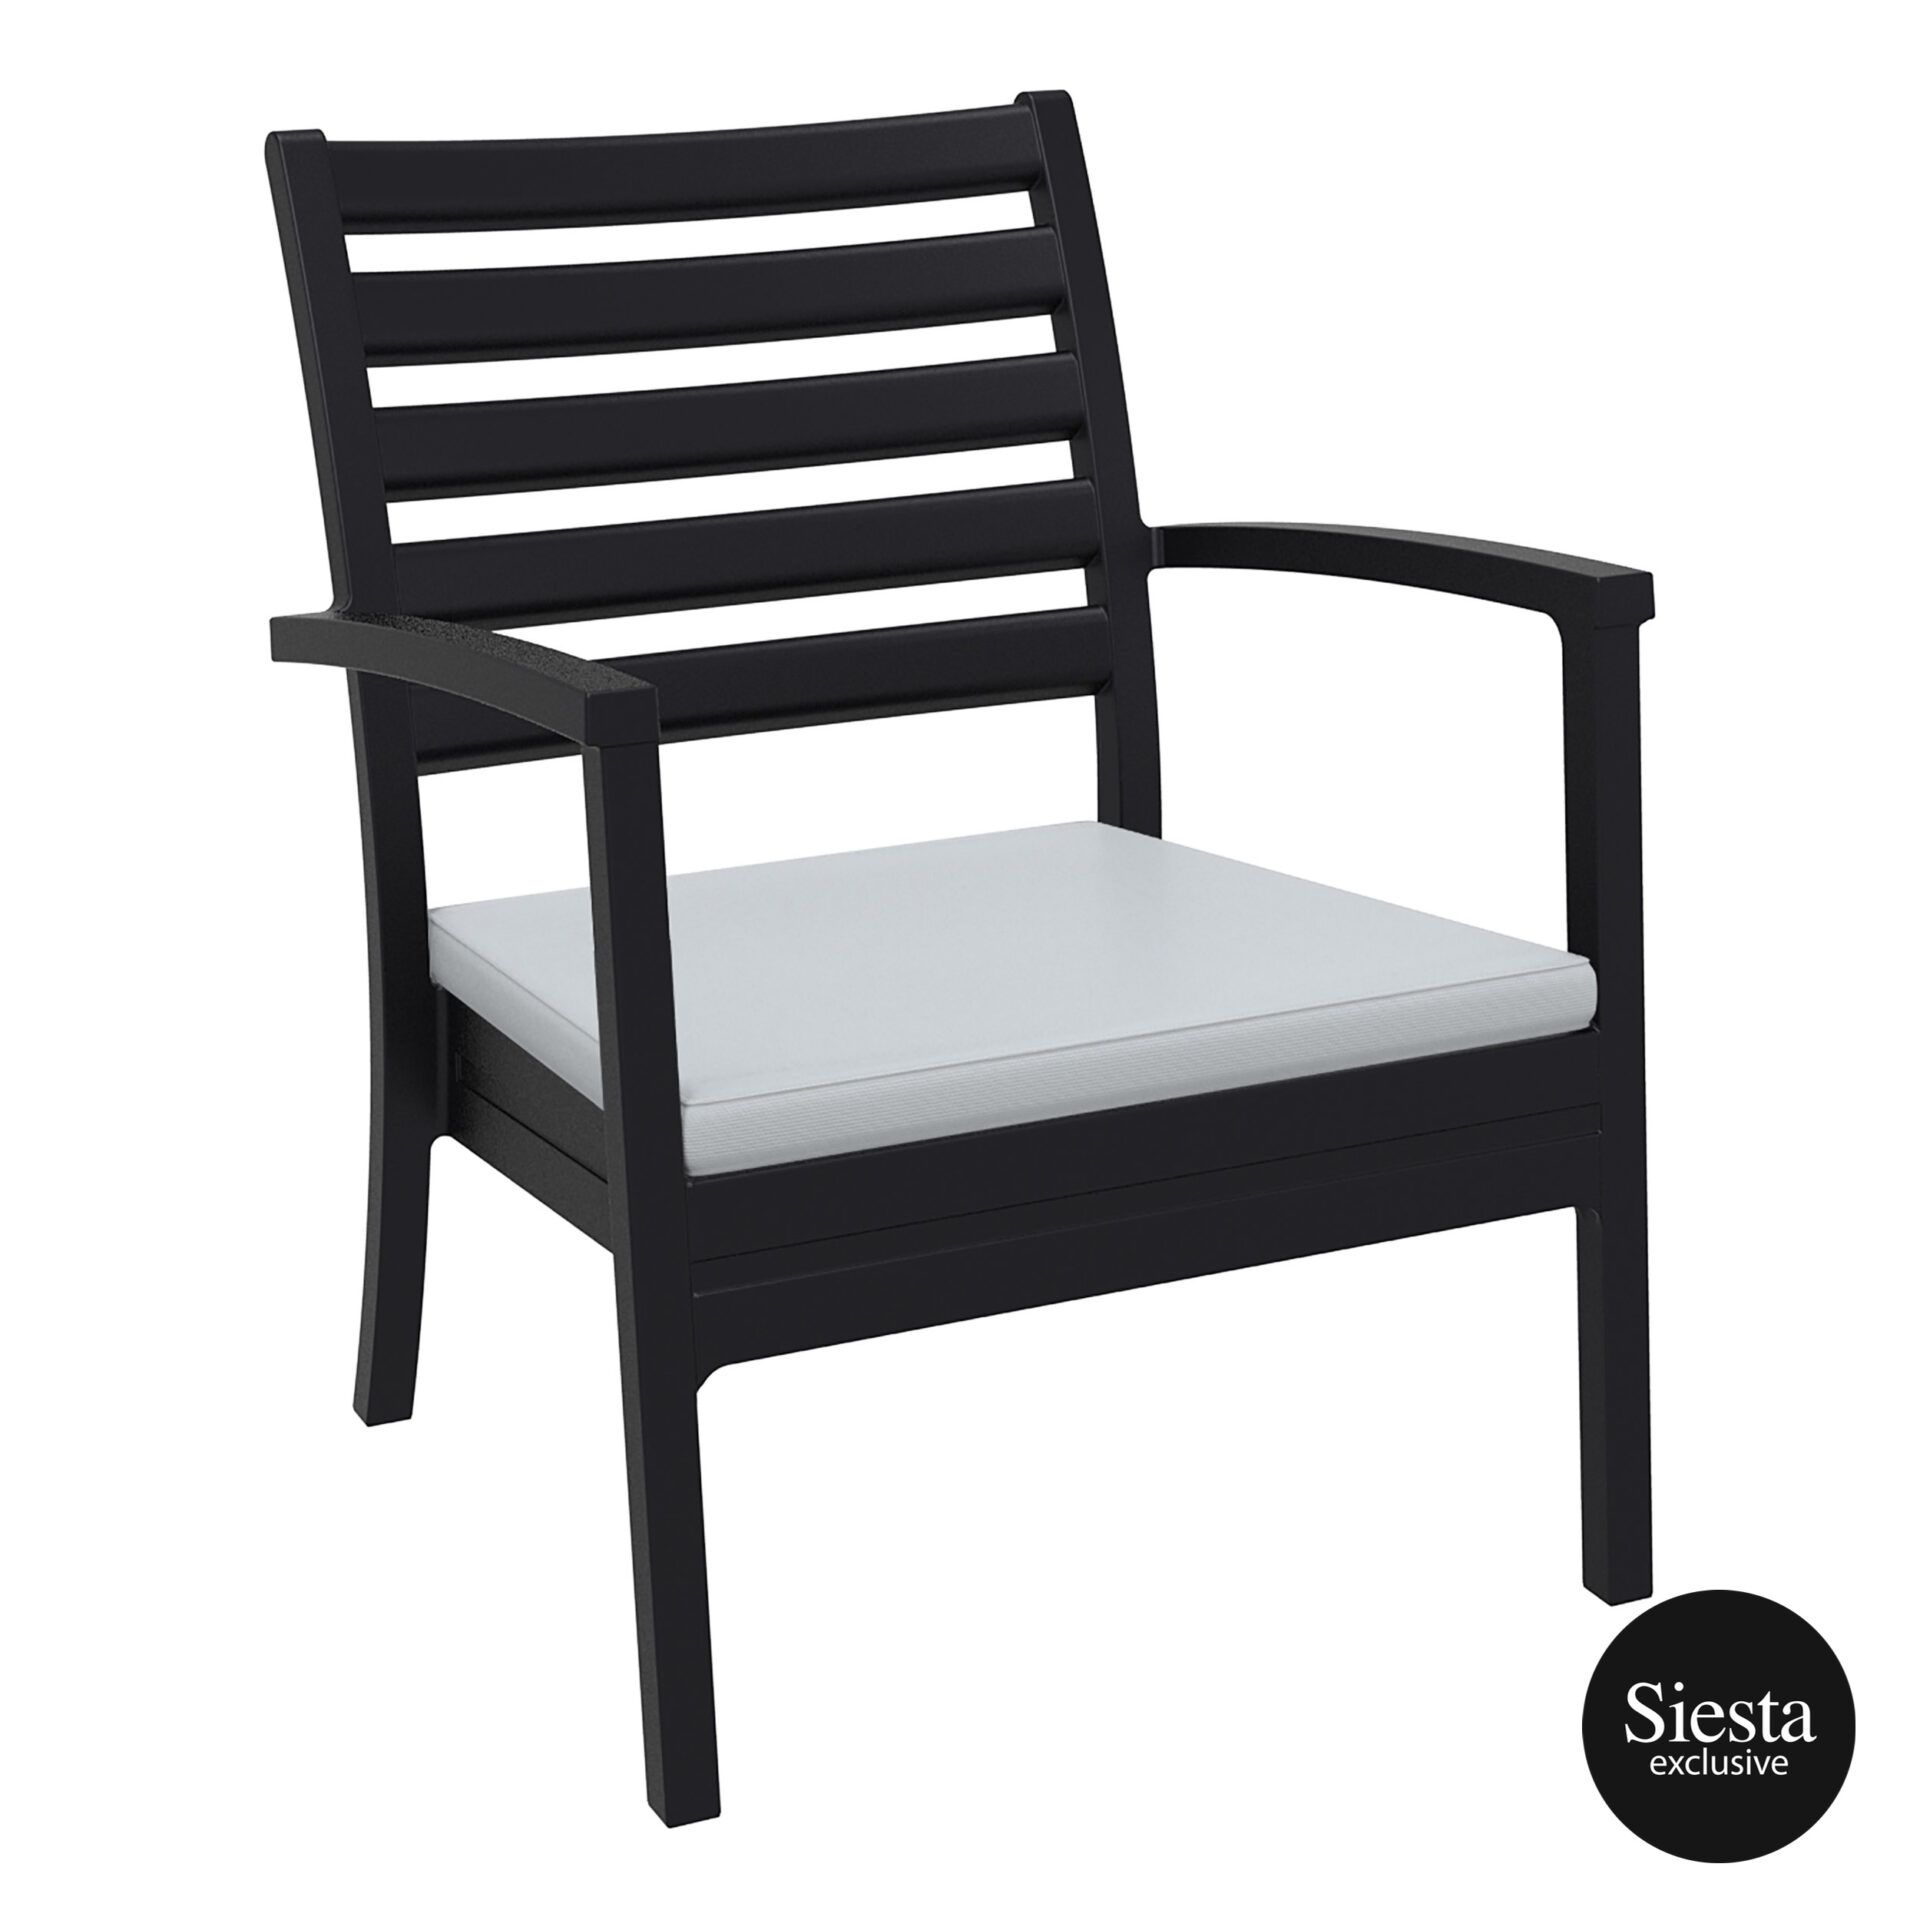 Artemis XL Armchair - Black with Light Grey Seat Cushion